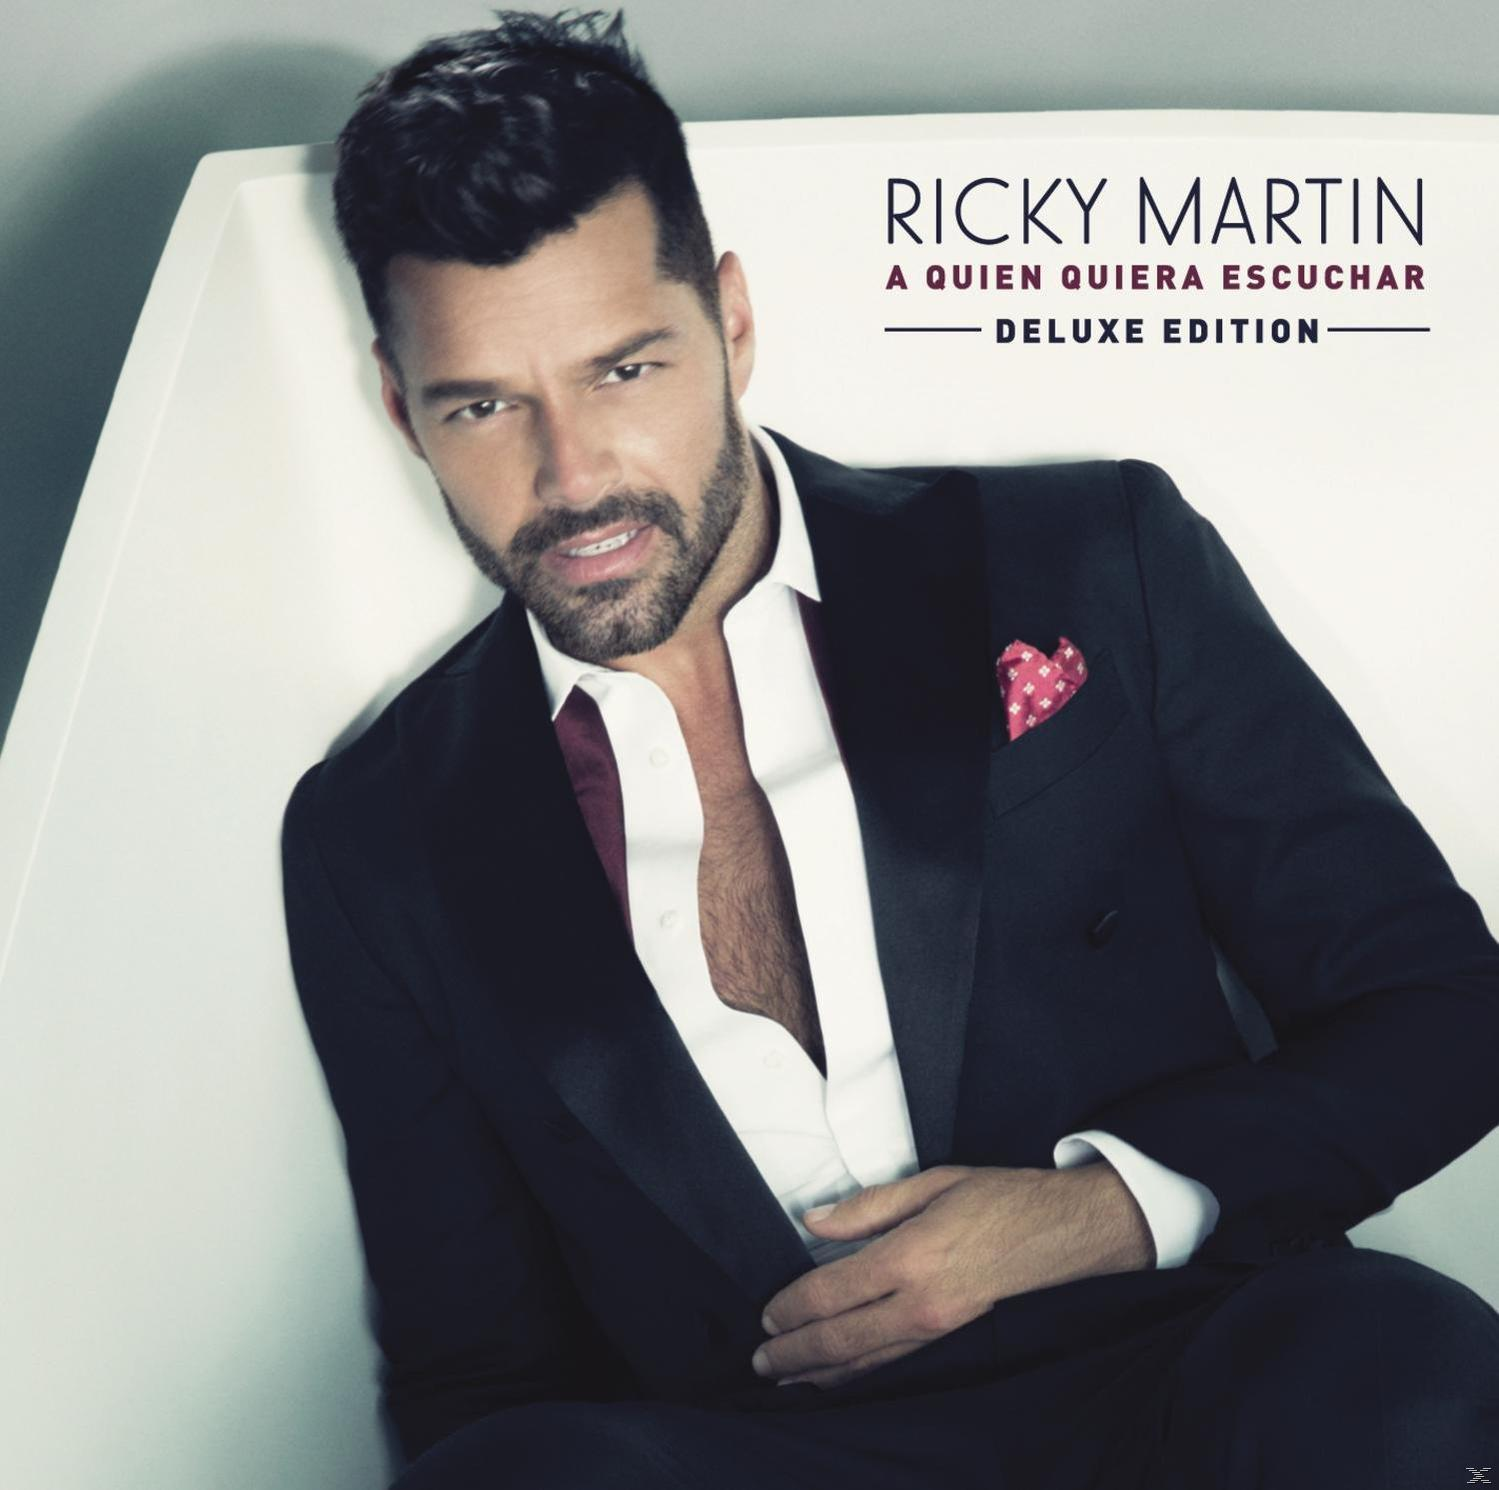 Quiera Quien A Escuchar - Ricky Martin - (CD)